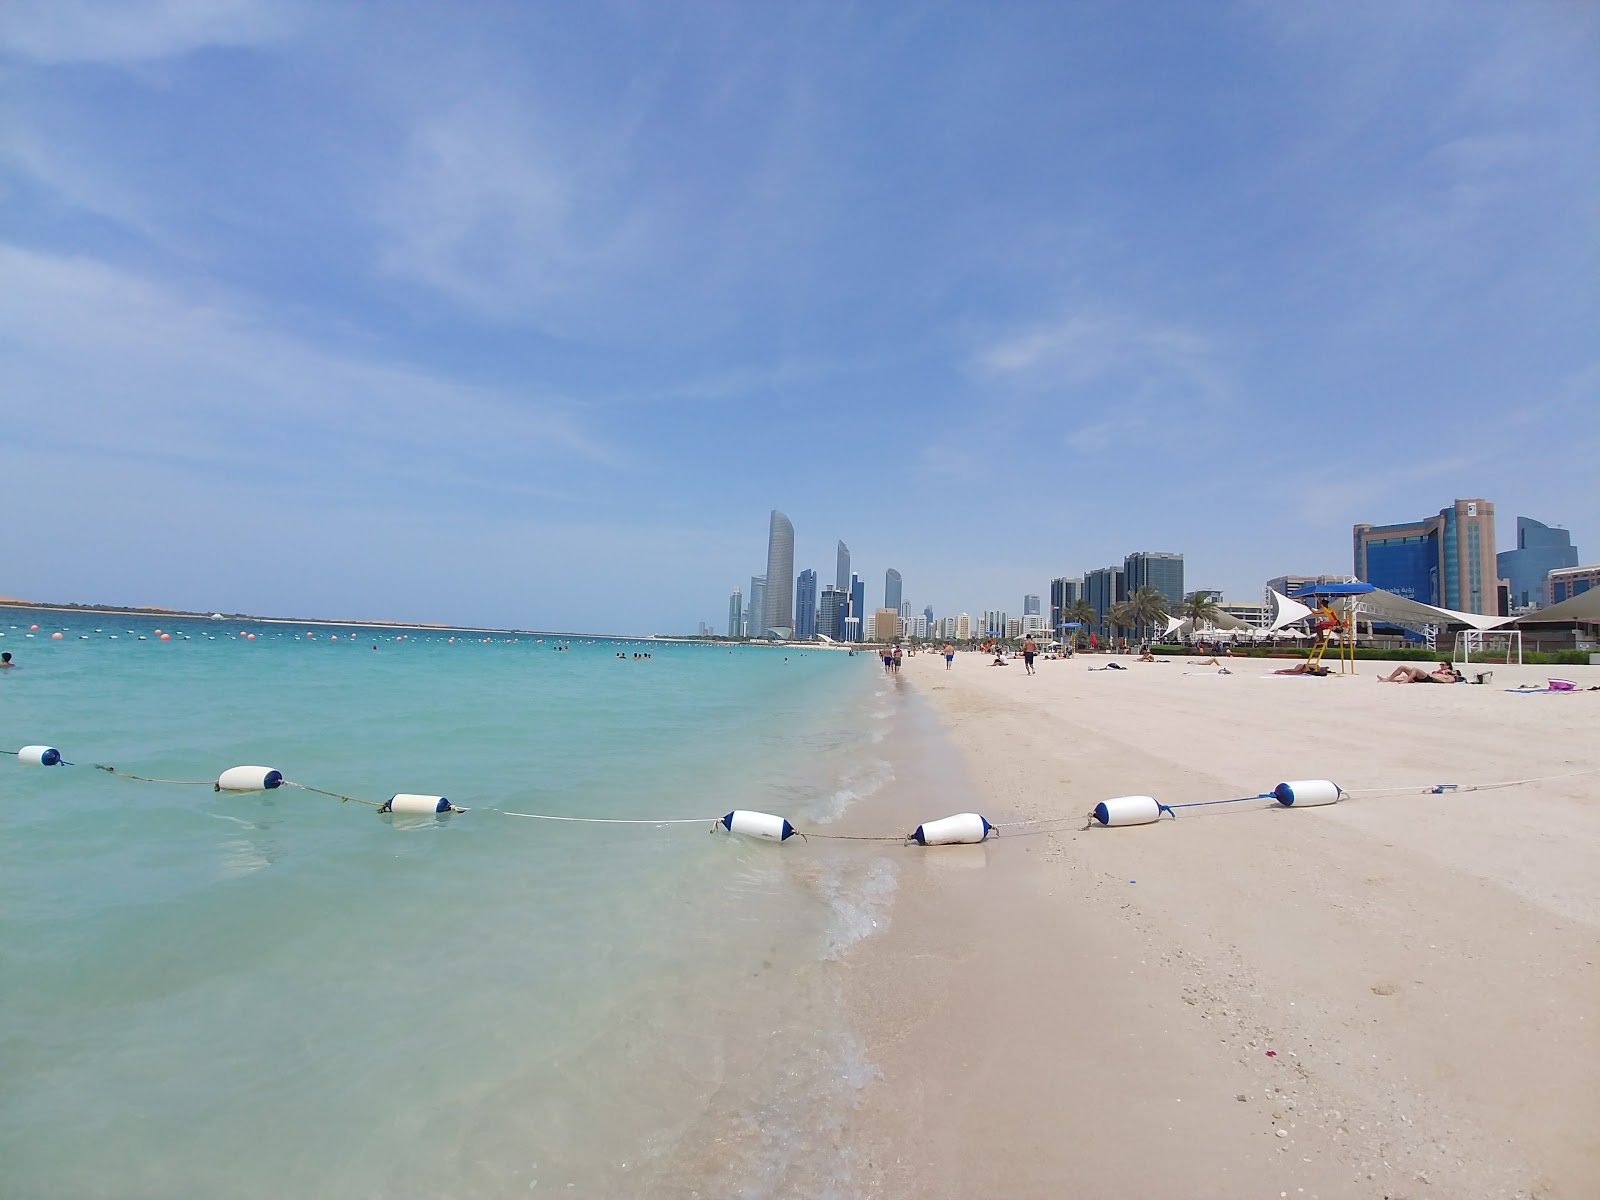 Photo of Corniche beach with spacious shore